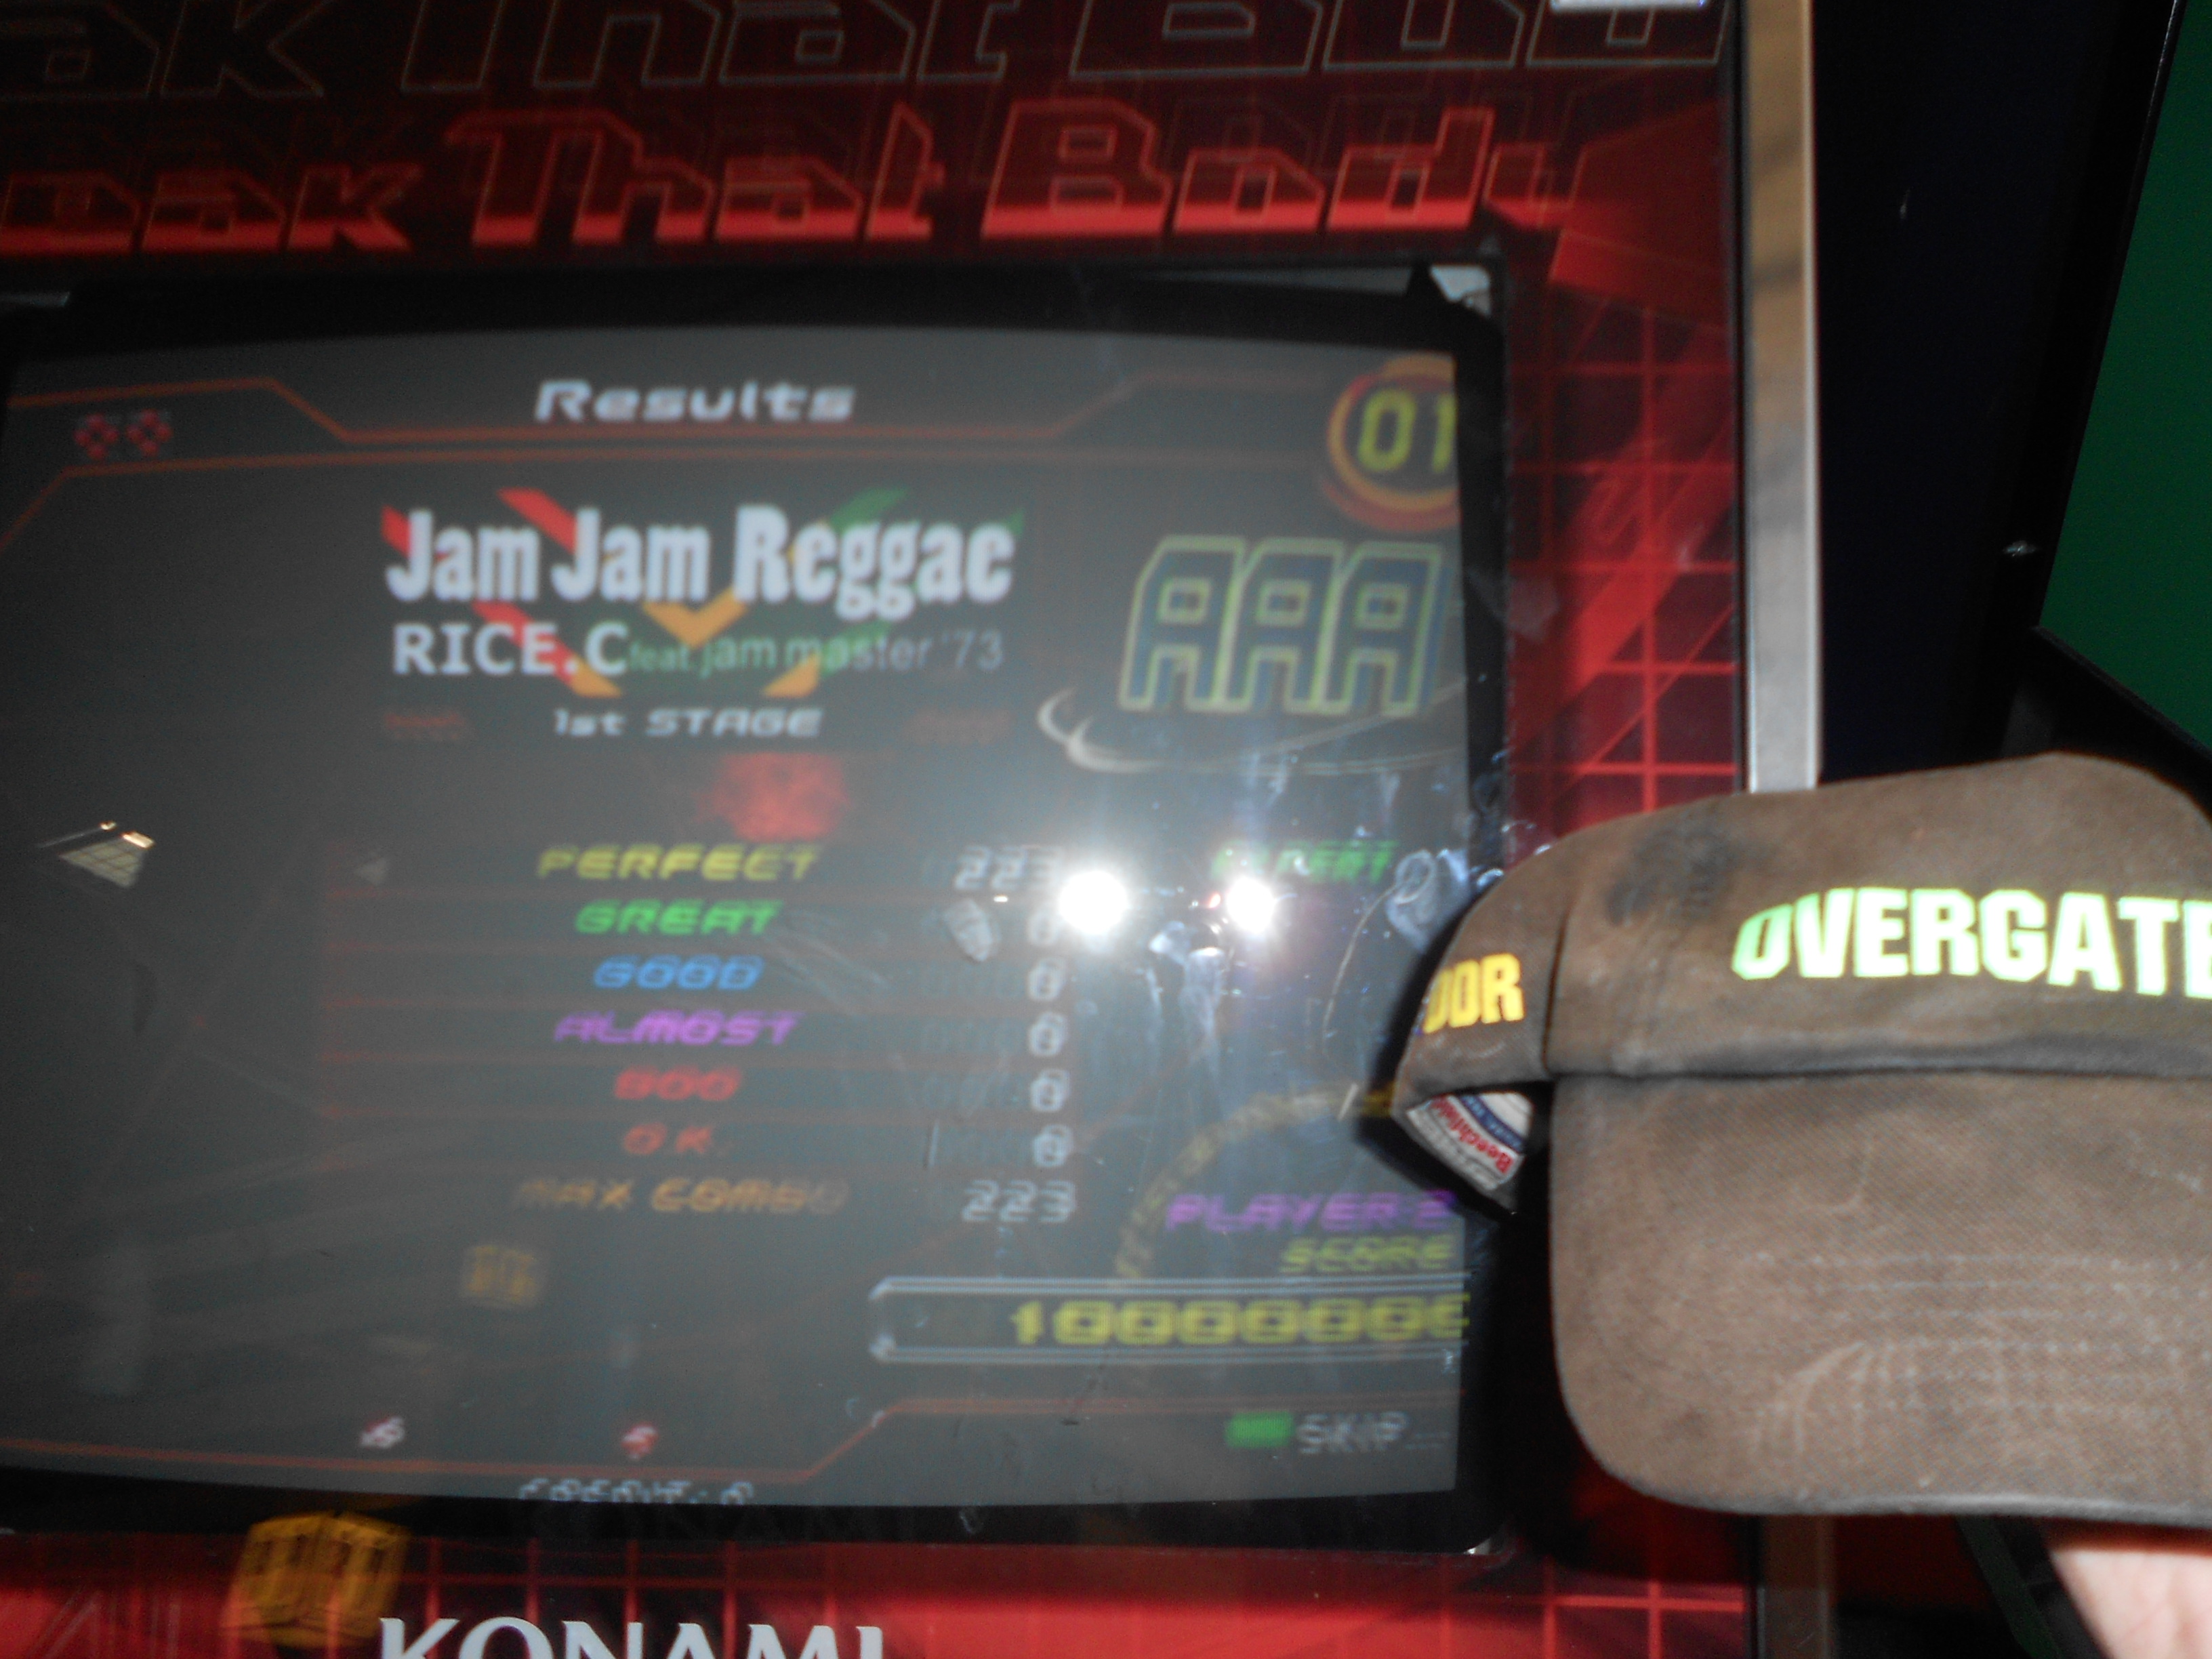 Overgate:Jam Jam Reggae -Rice C feat Jam master 73 (double expert):AAA #29